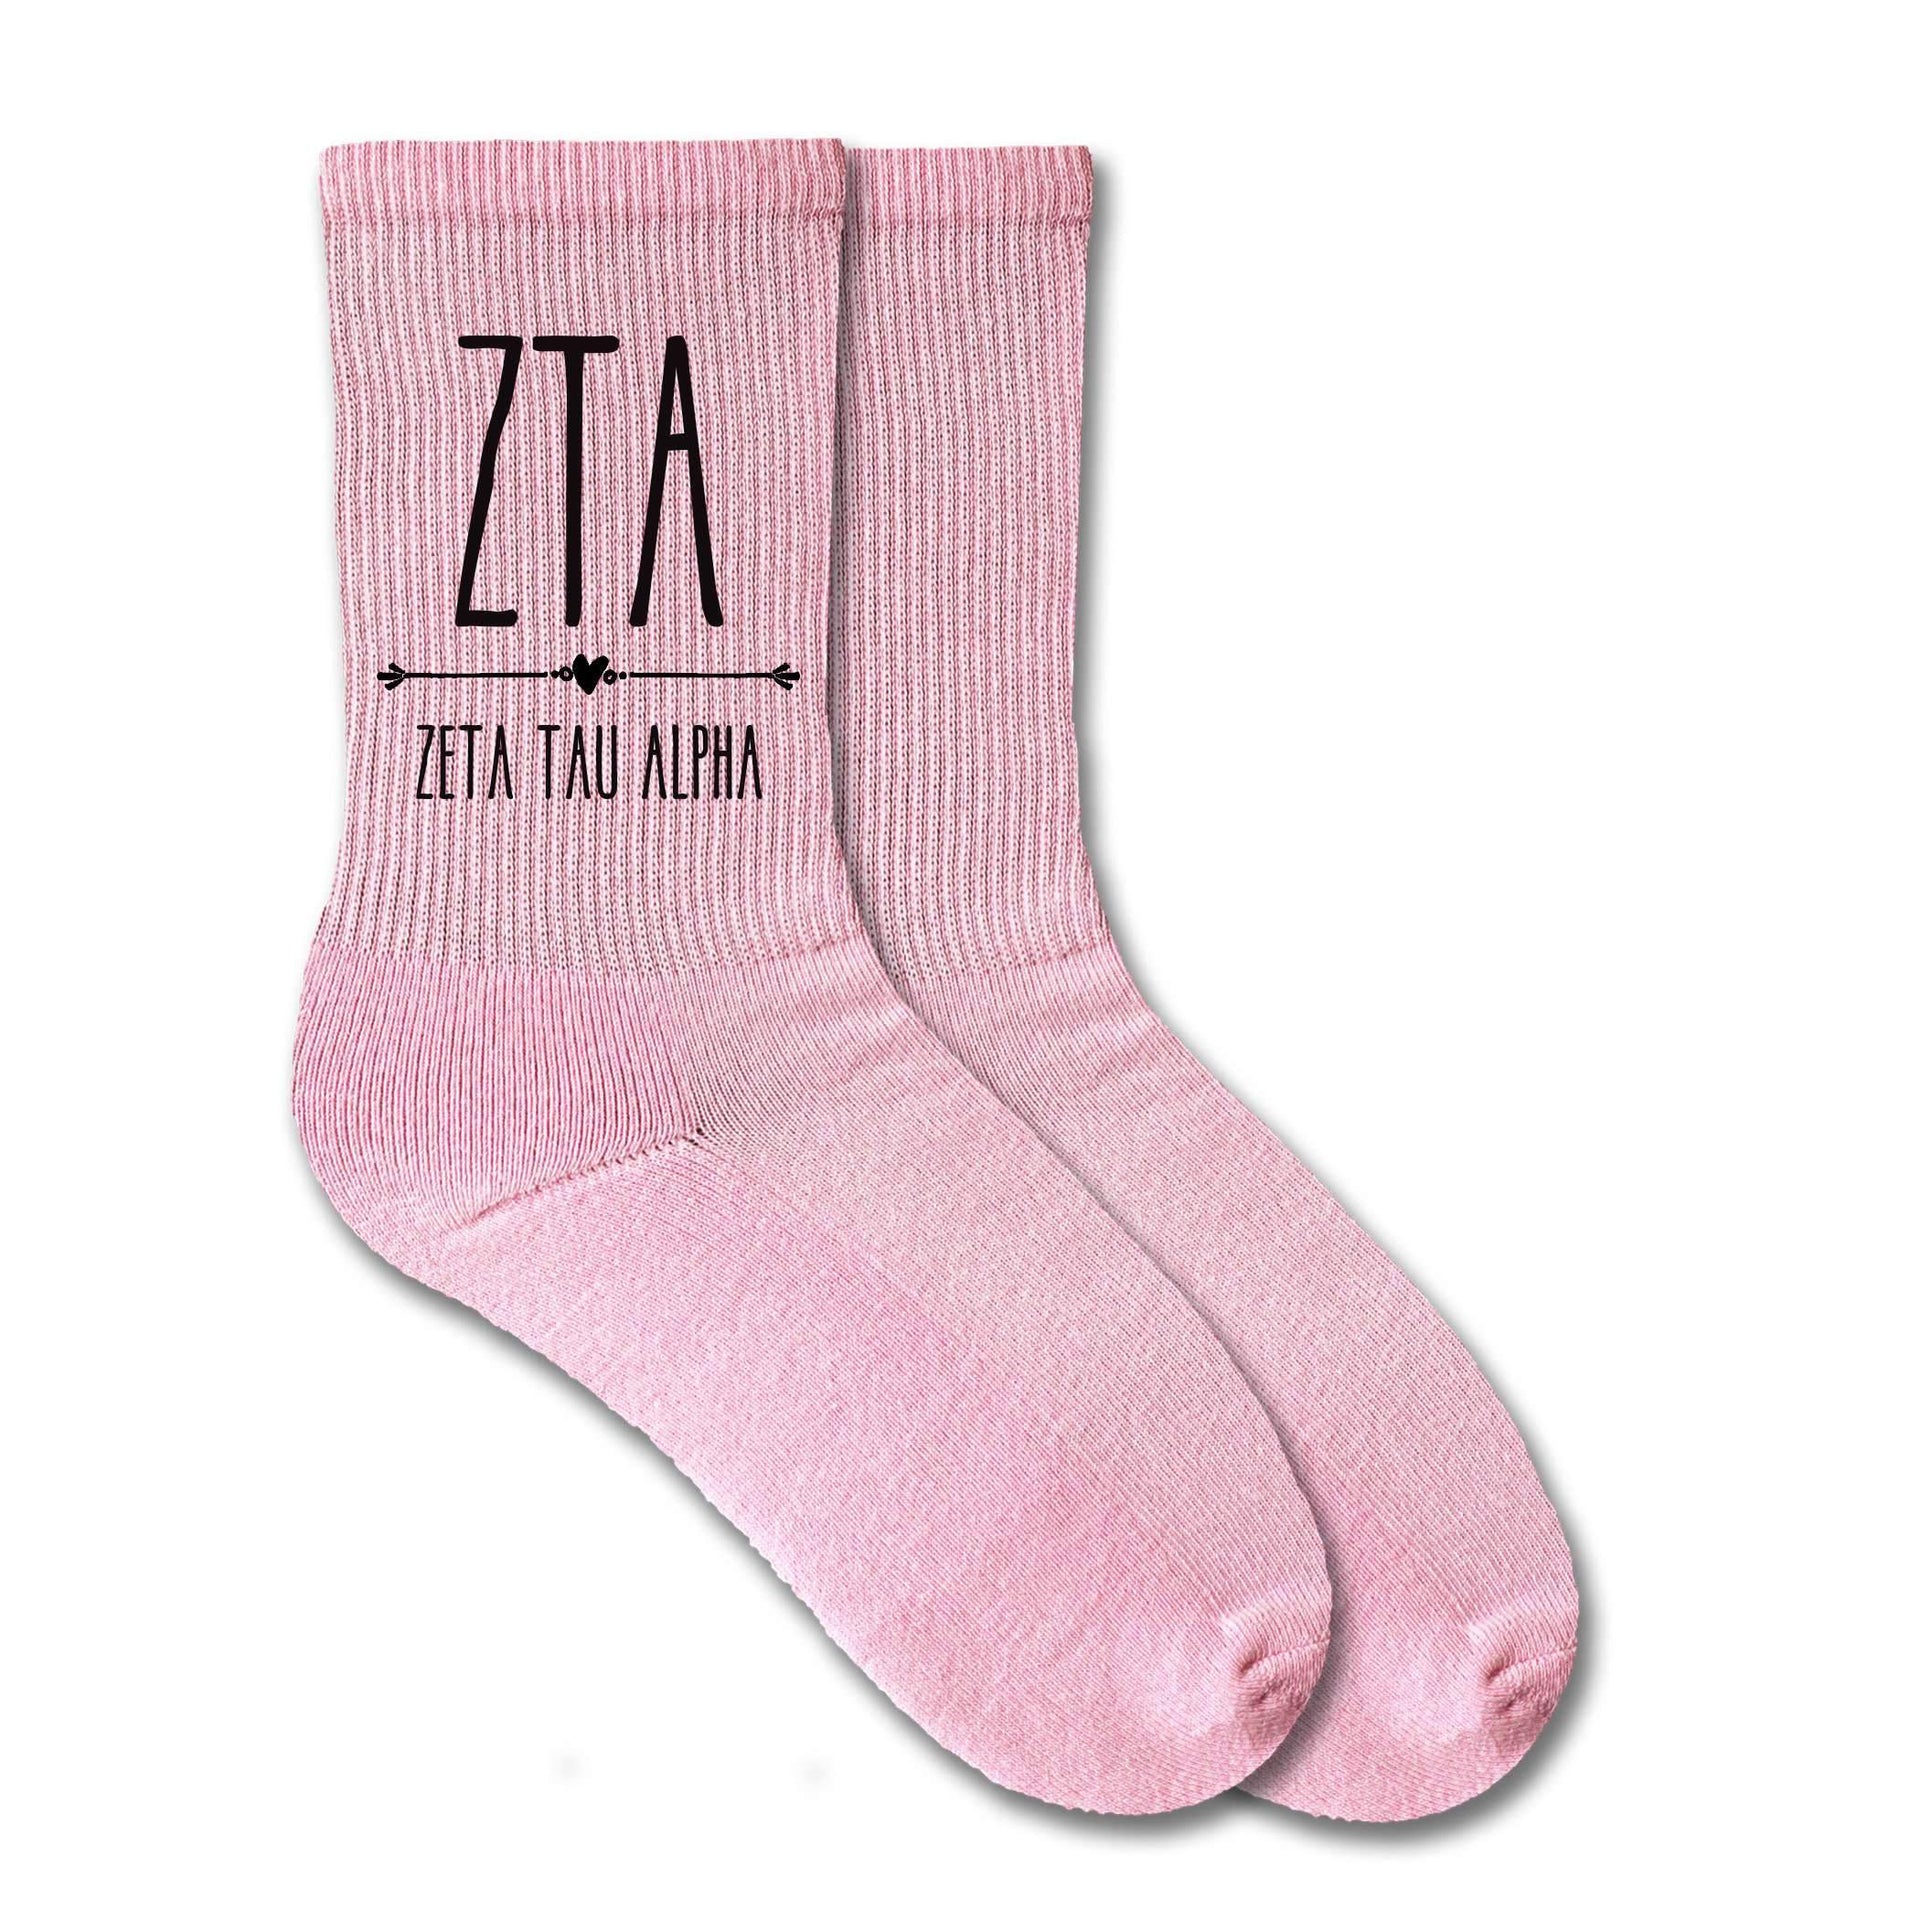 ZTA sorority letters custom printed on pink crew socks